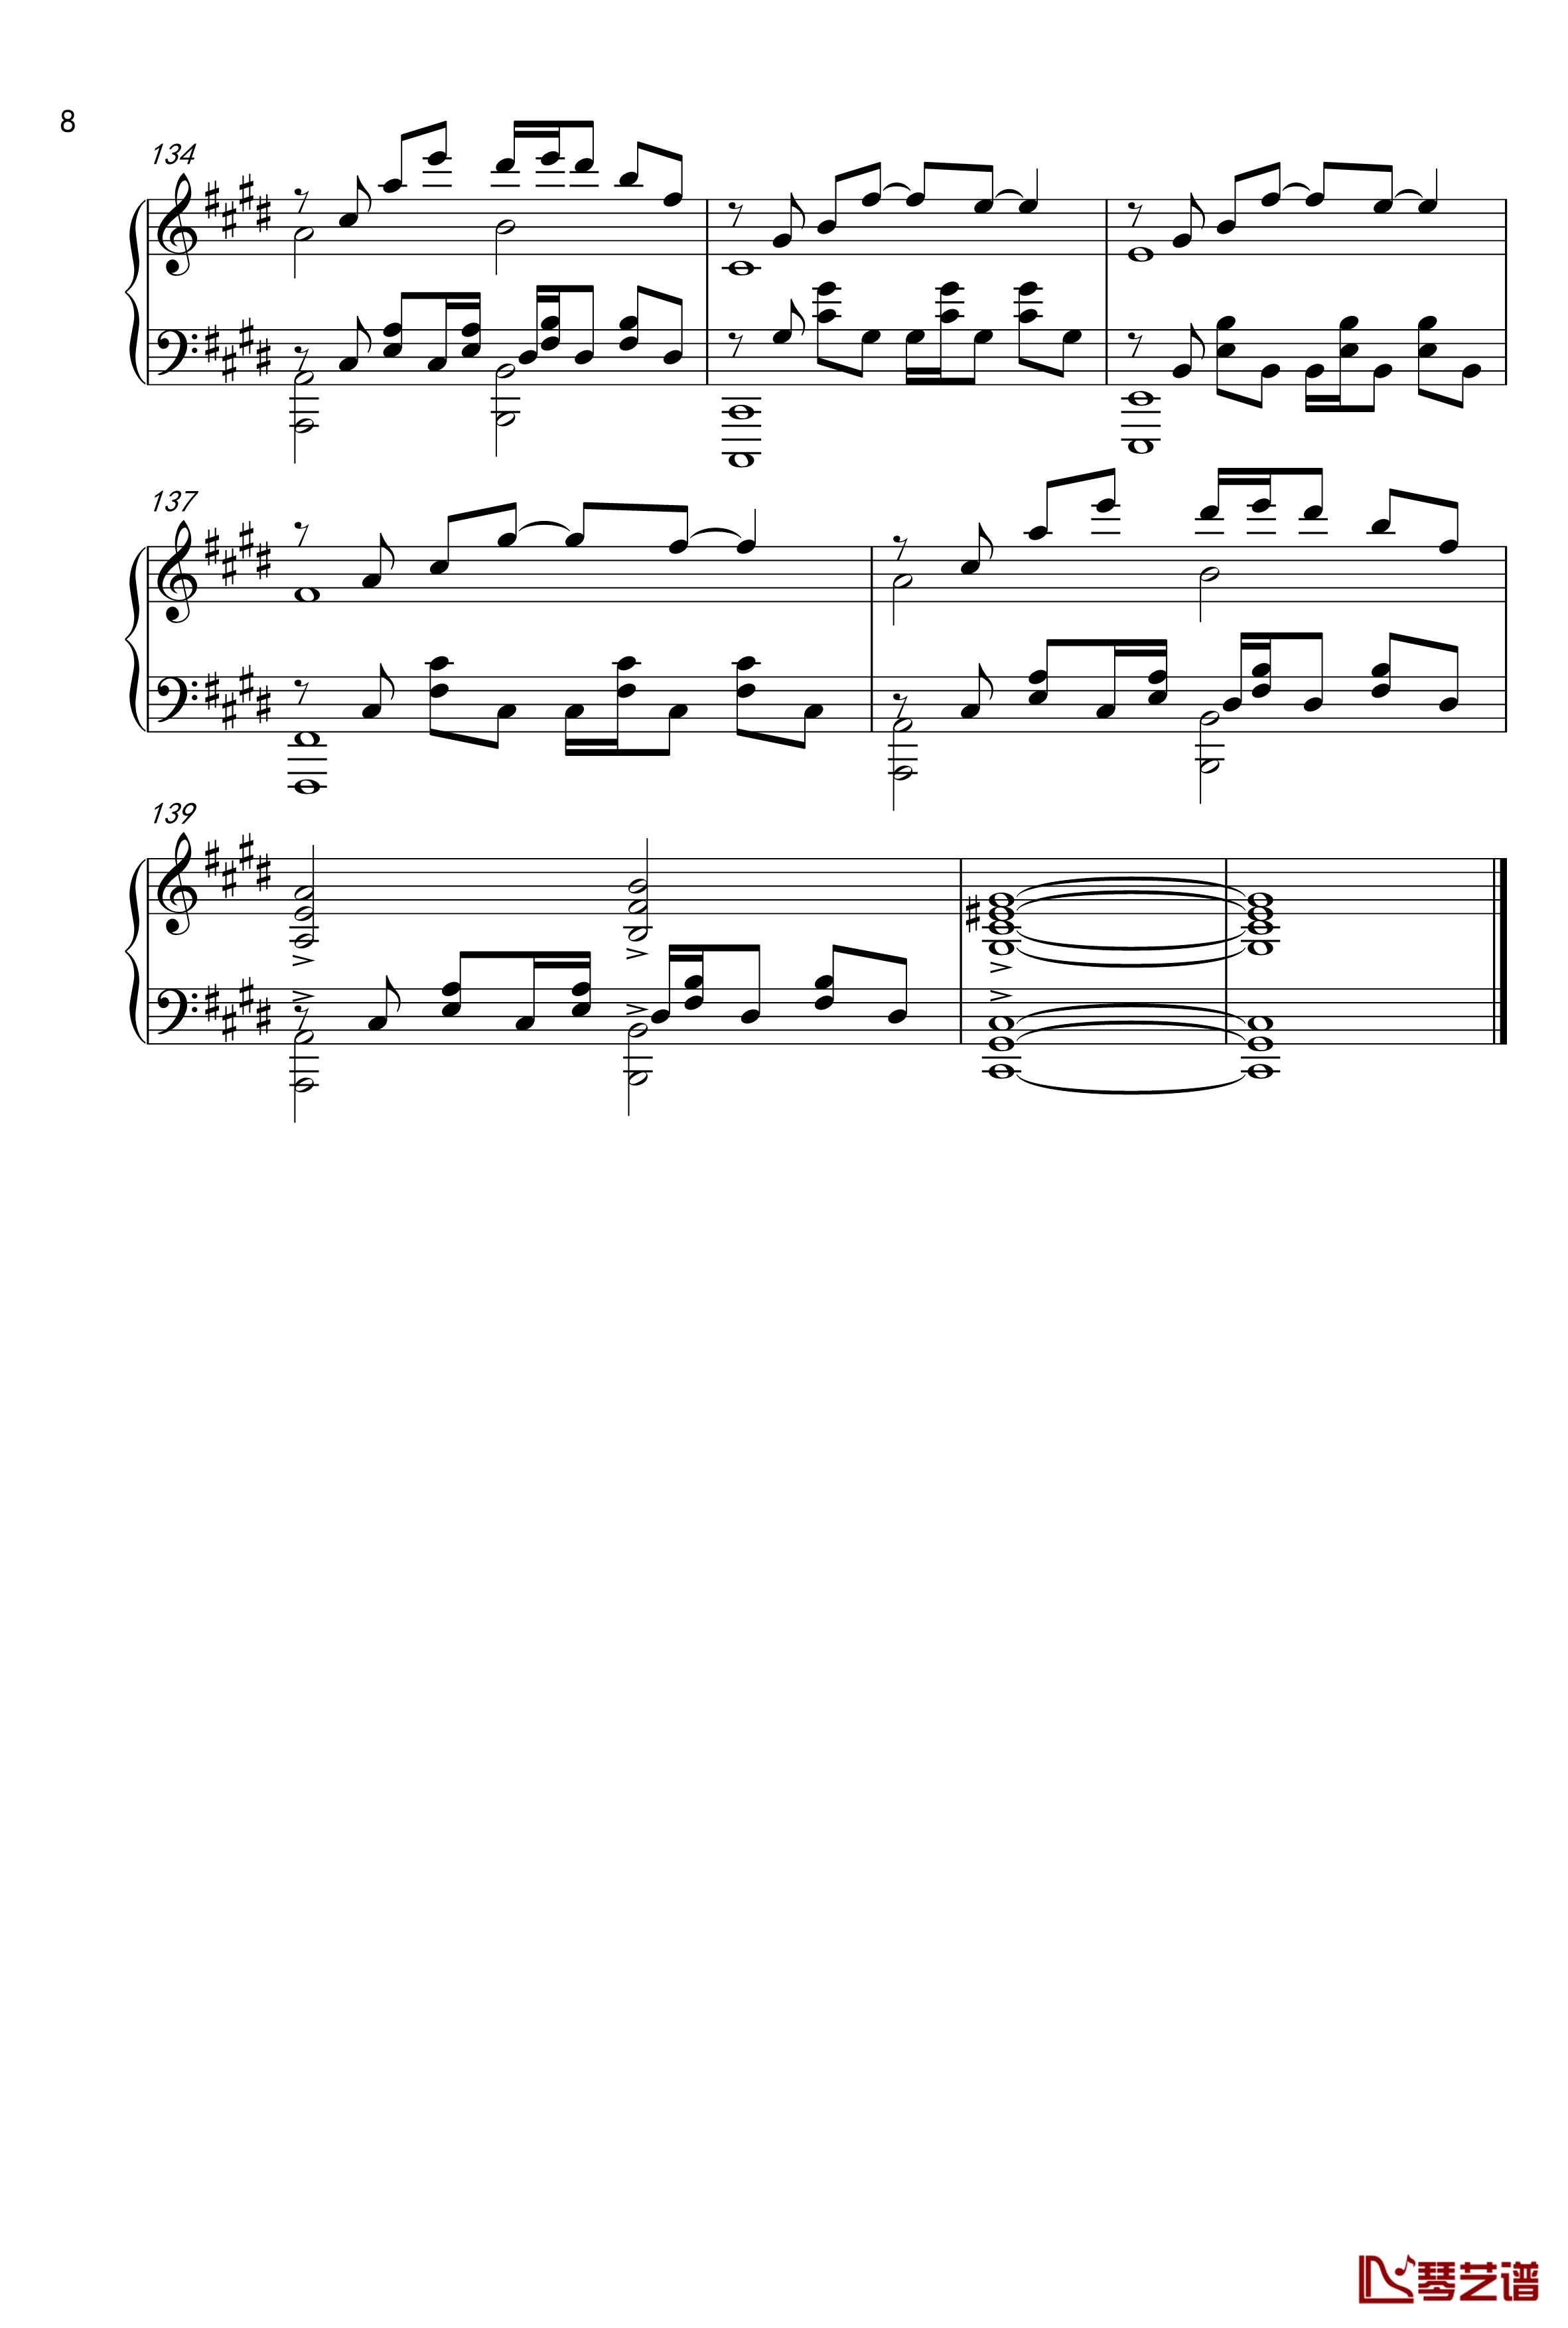 OVERLAP 钢琴谱-《游戏王》第一部190-224话OP-游戏王8